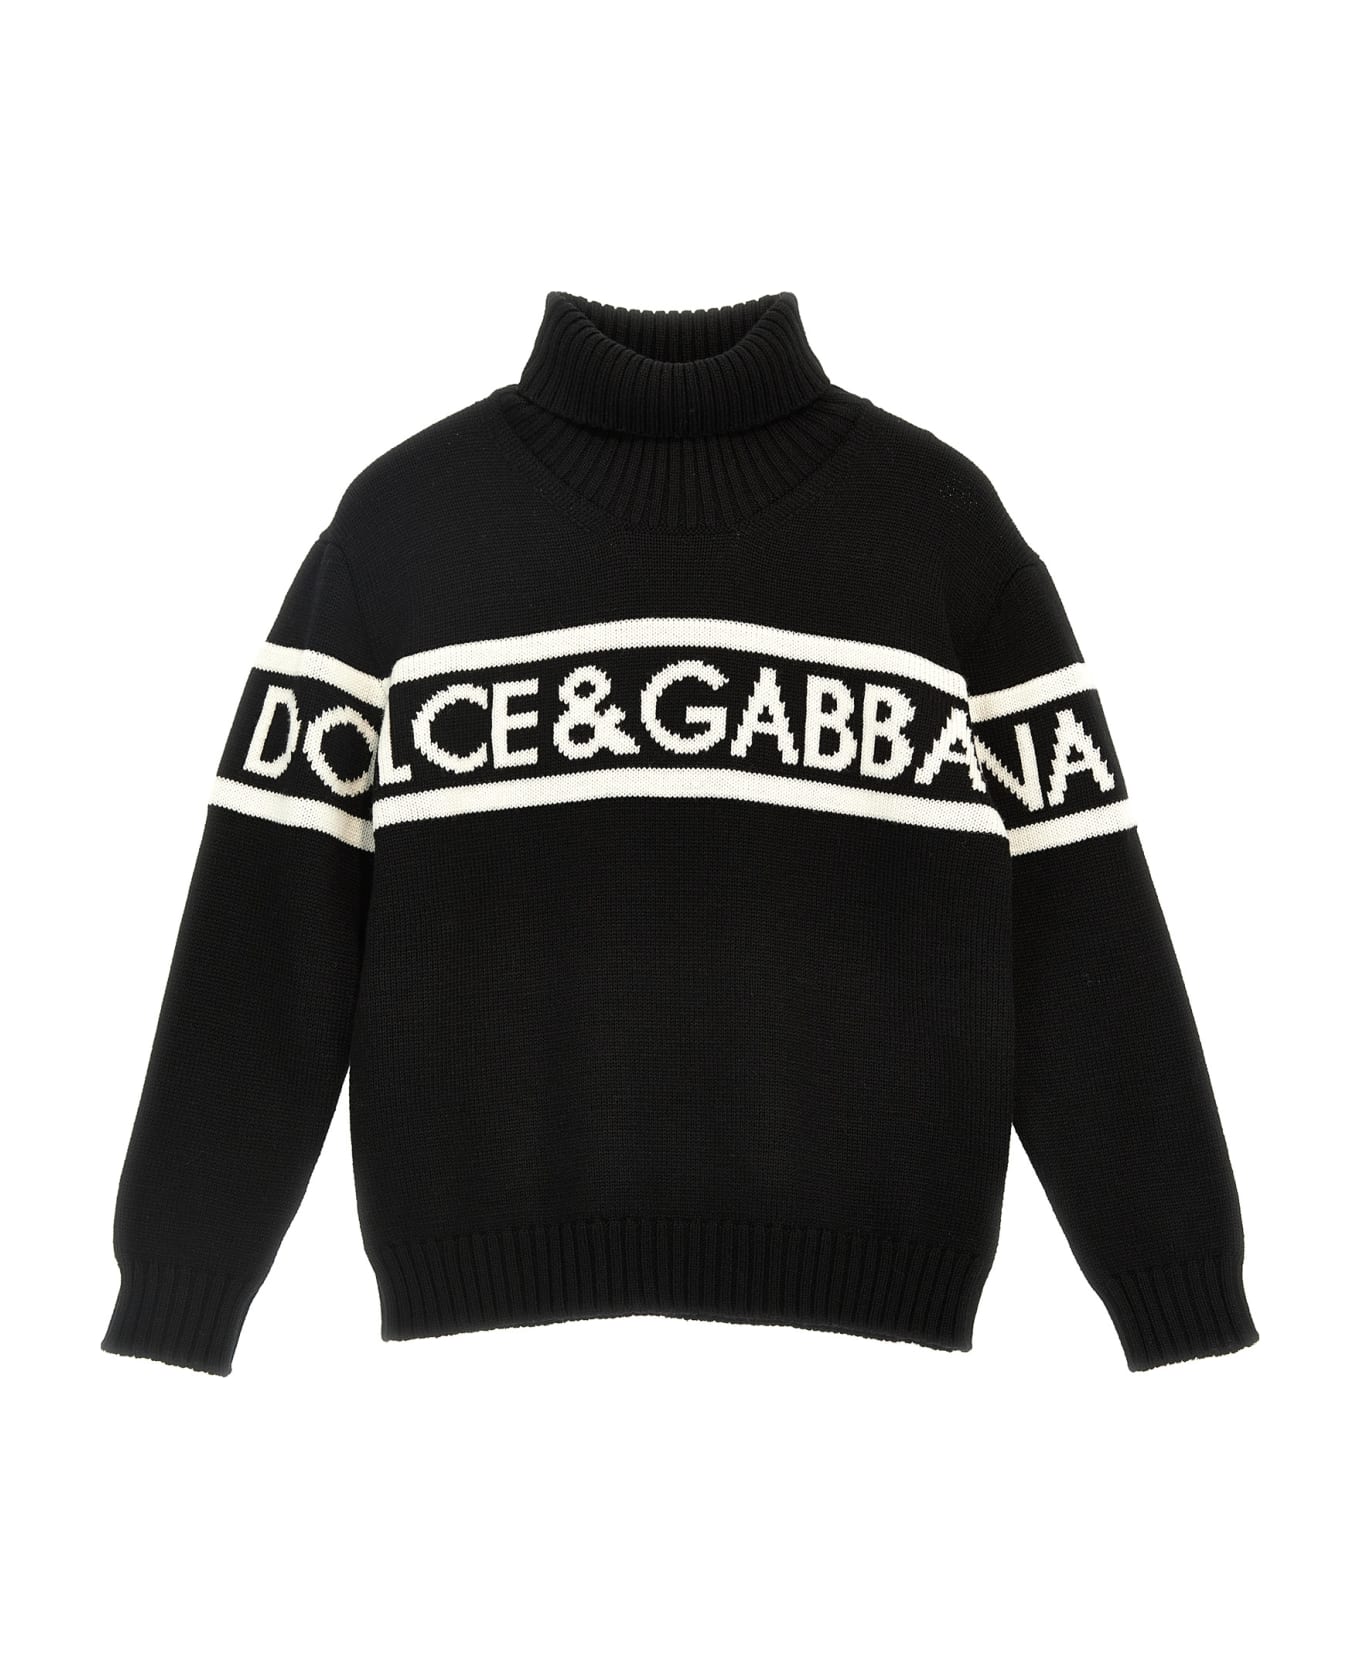 Dolce & Gabbana Logo Sweater - White/Black